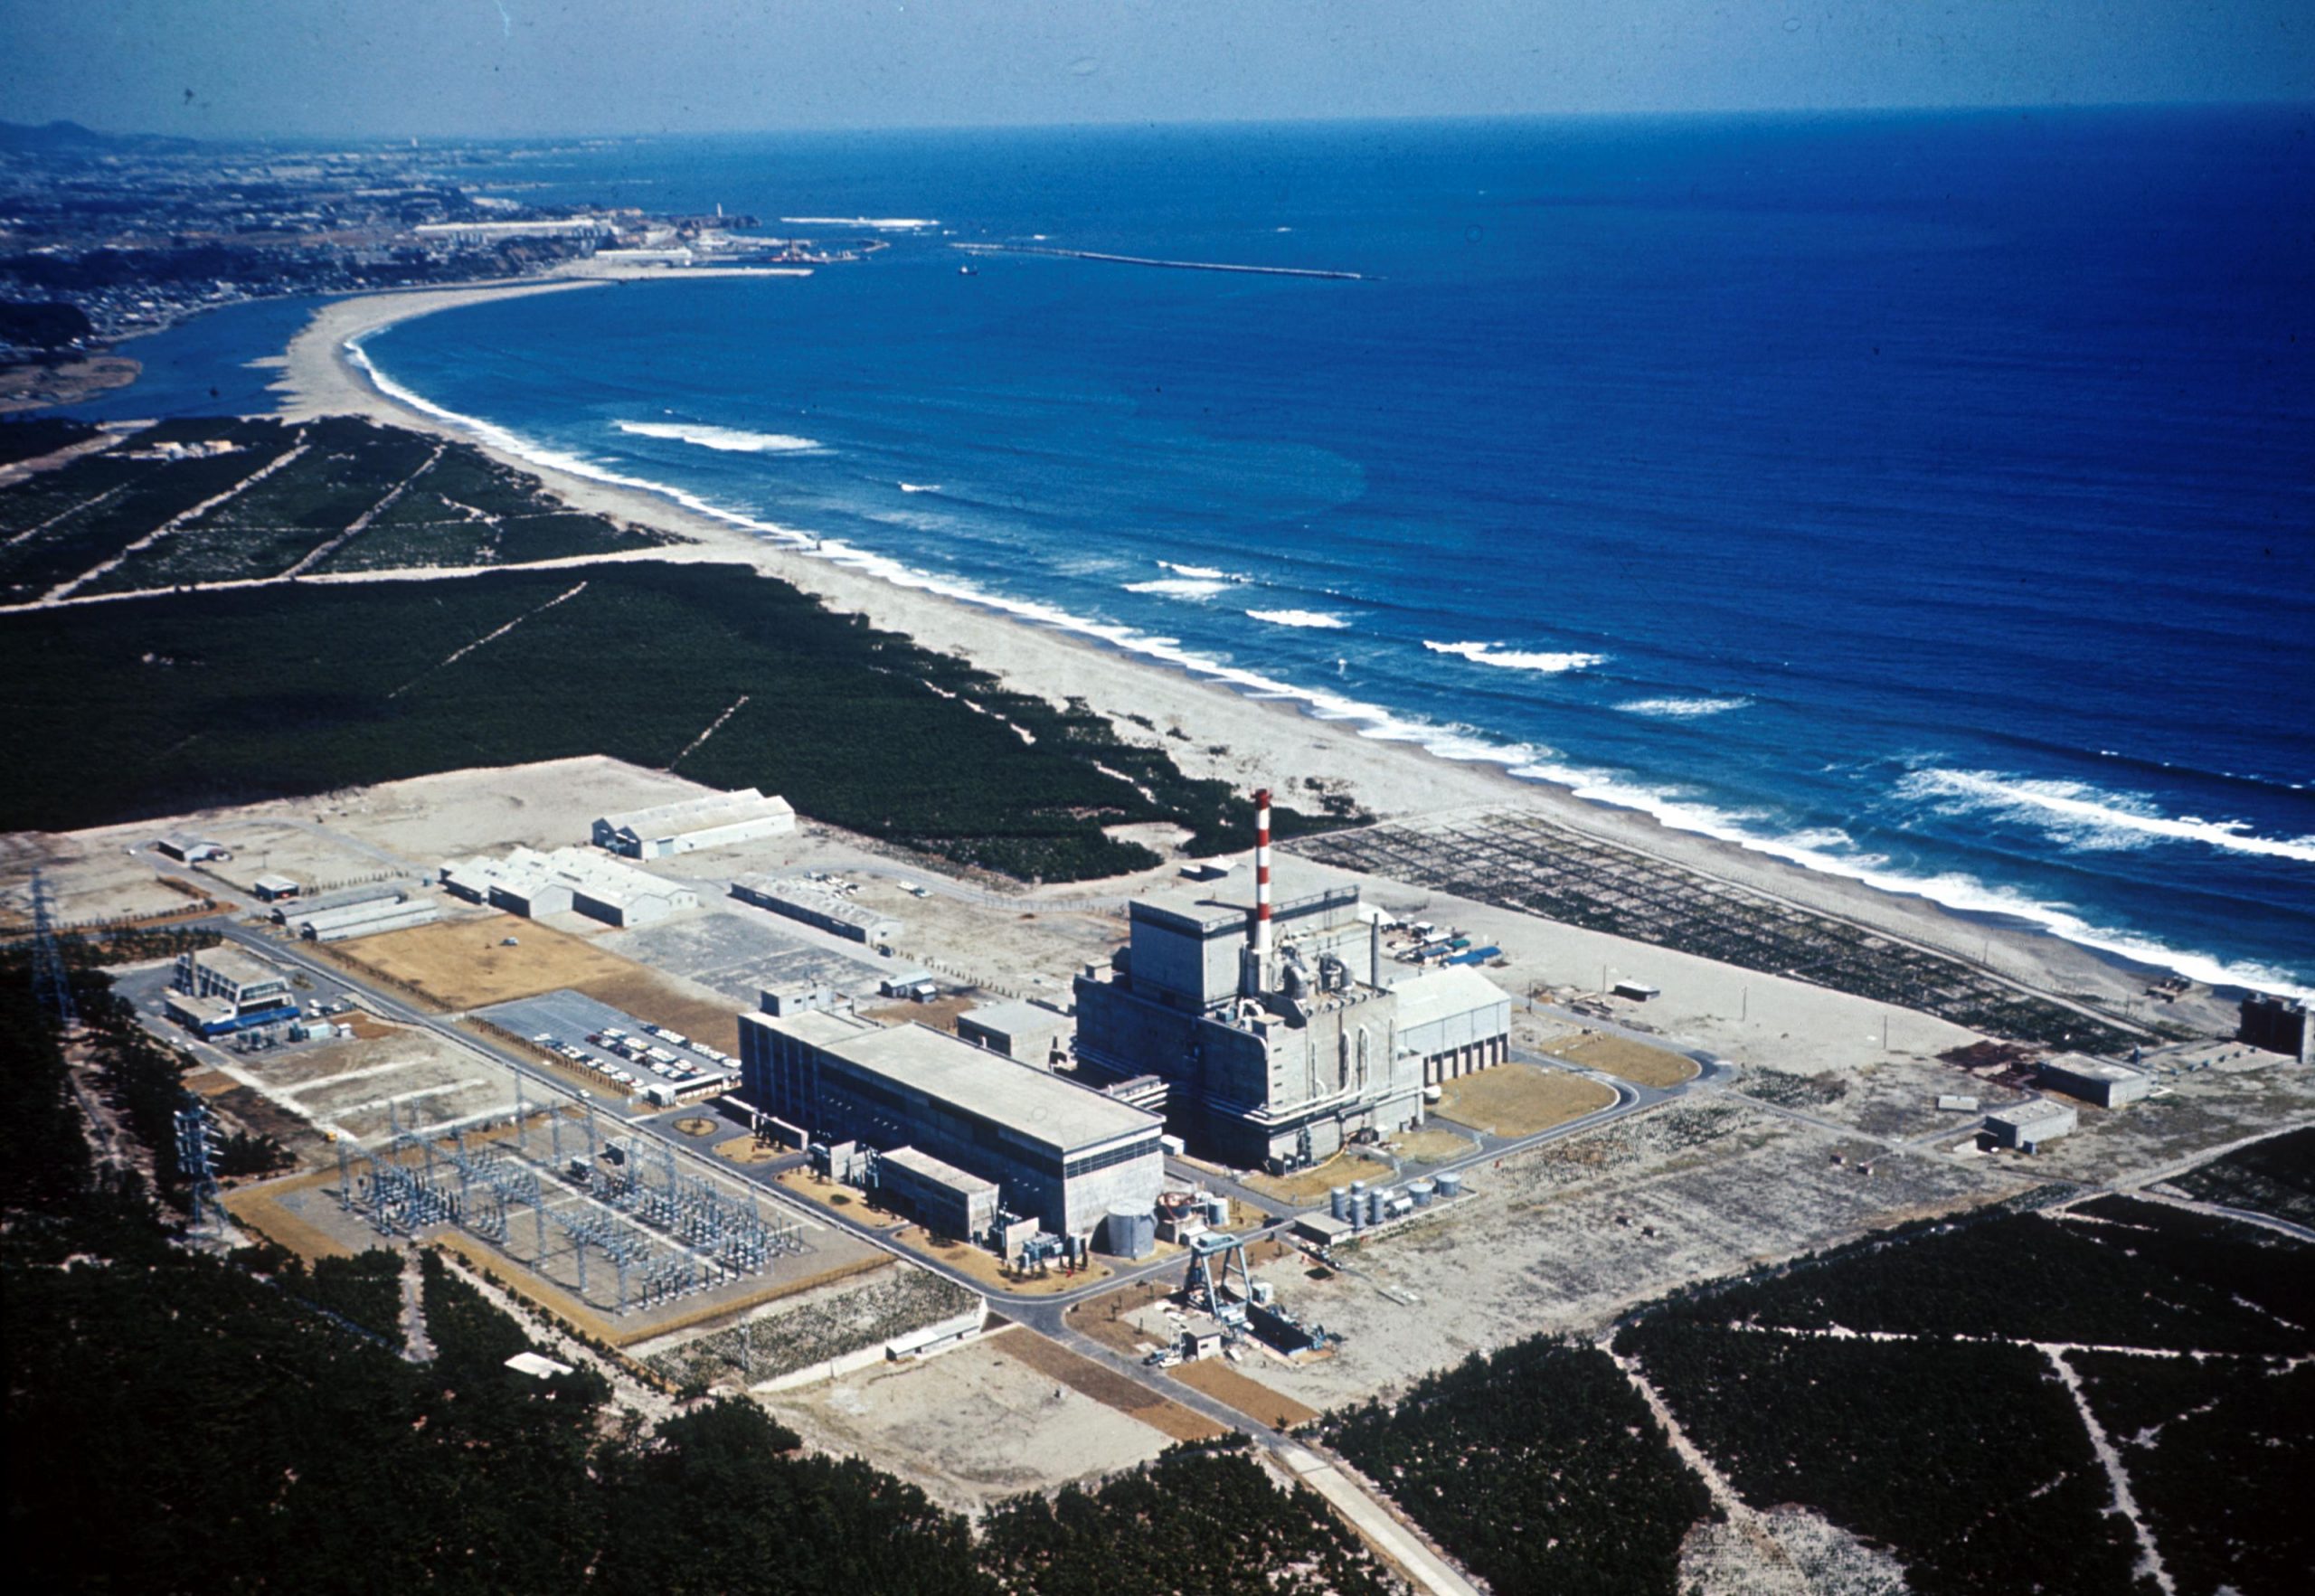 to show Tokai Nuclear Plant